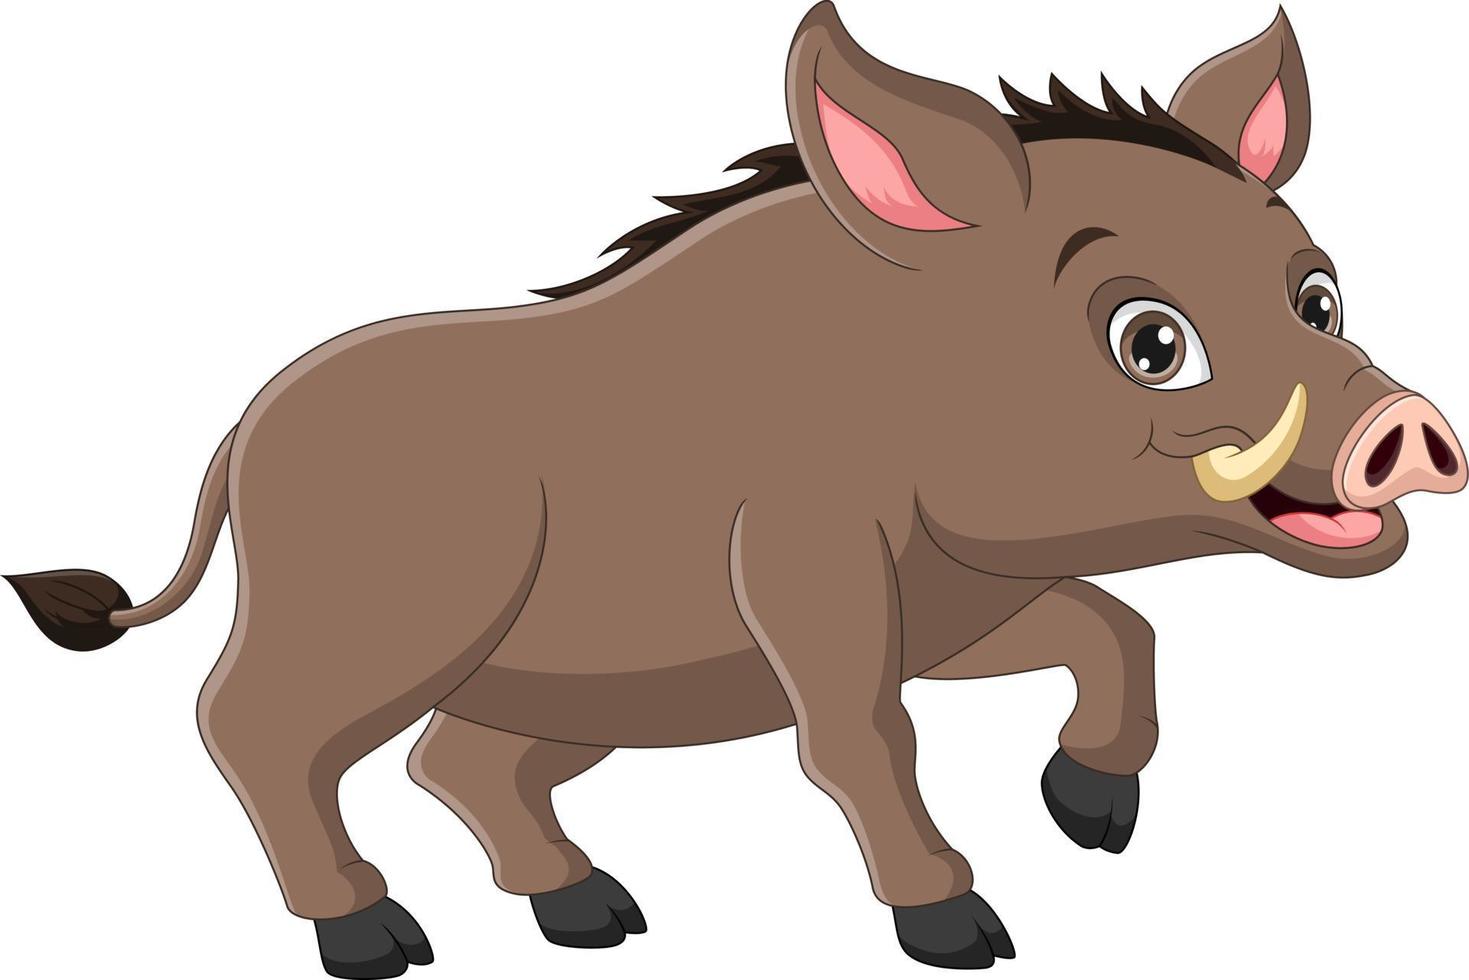 Wild boar cartoon on white background vector